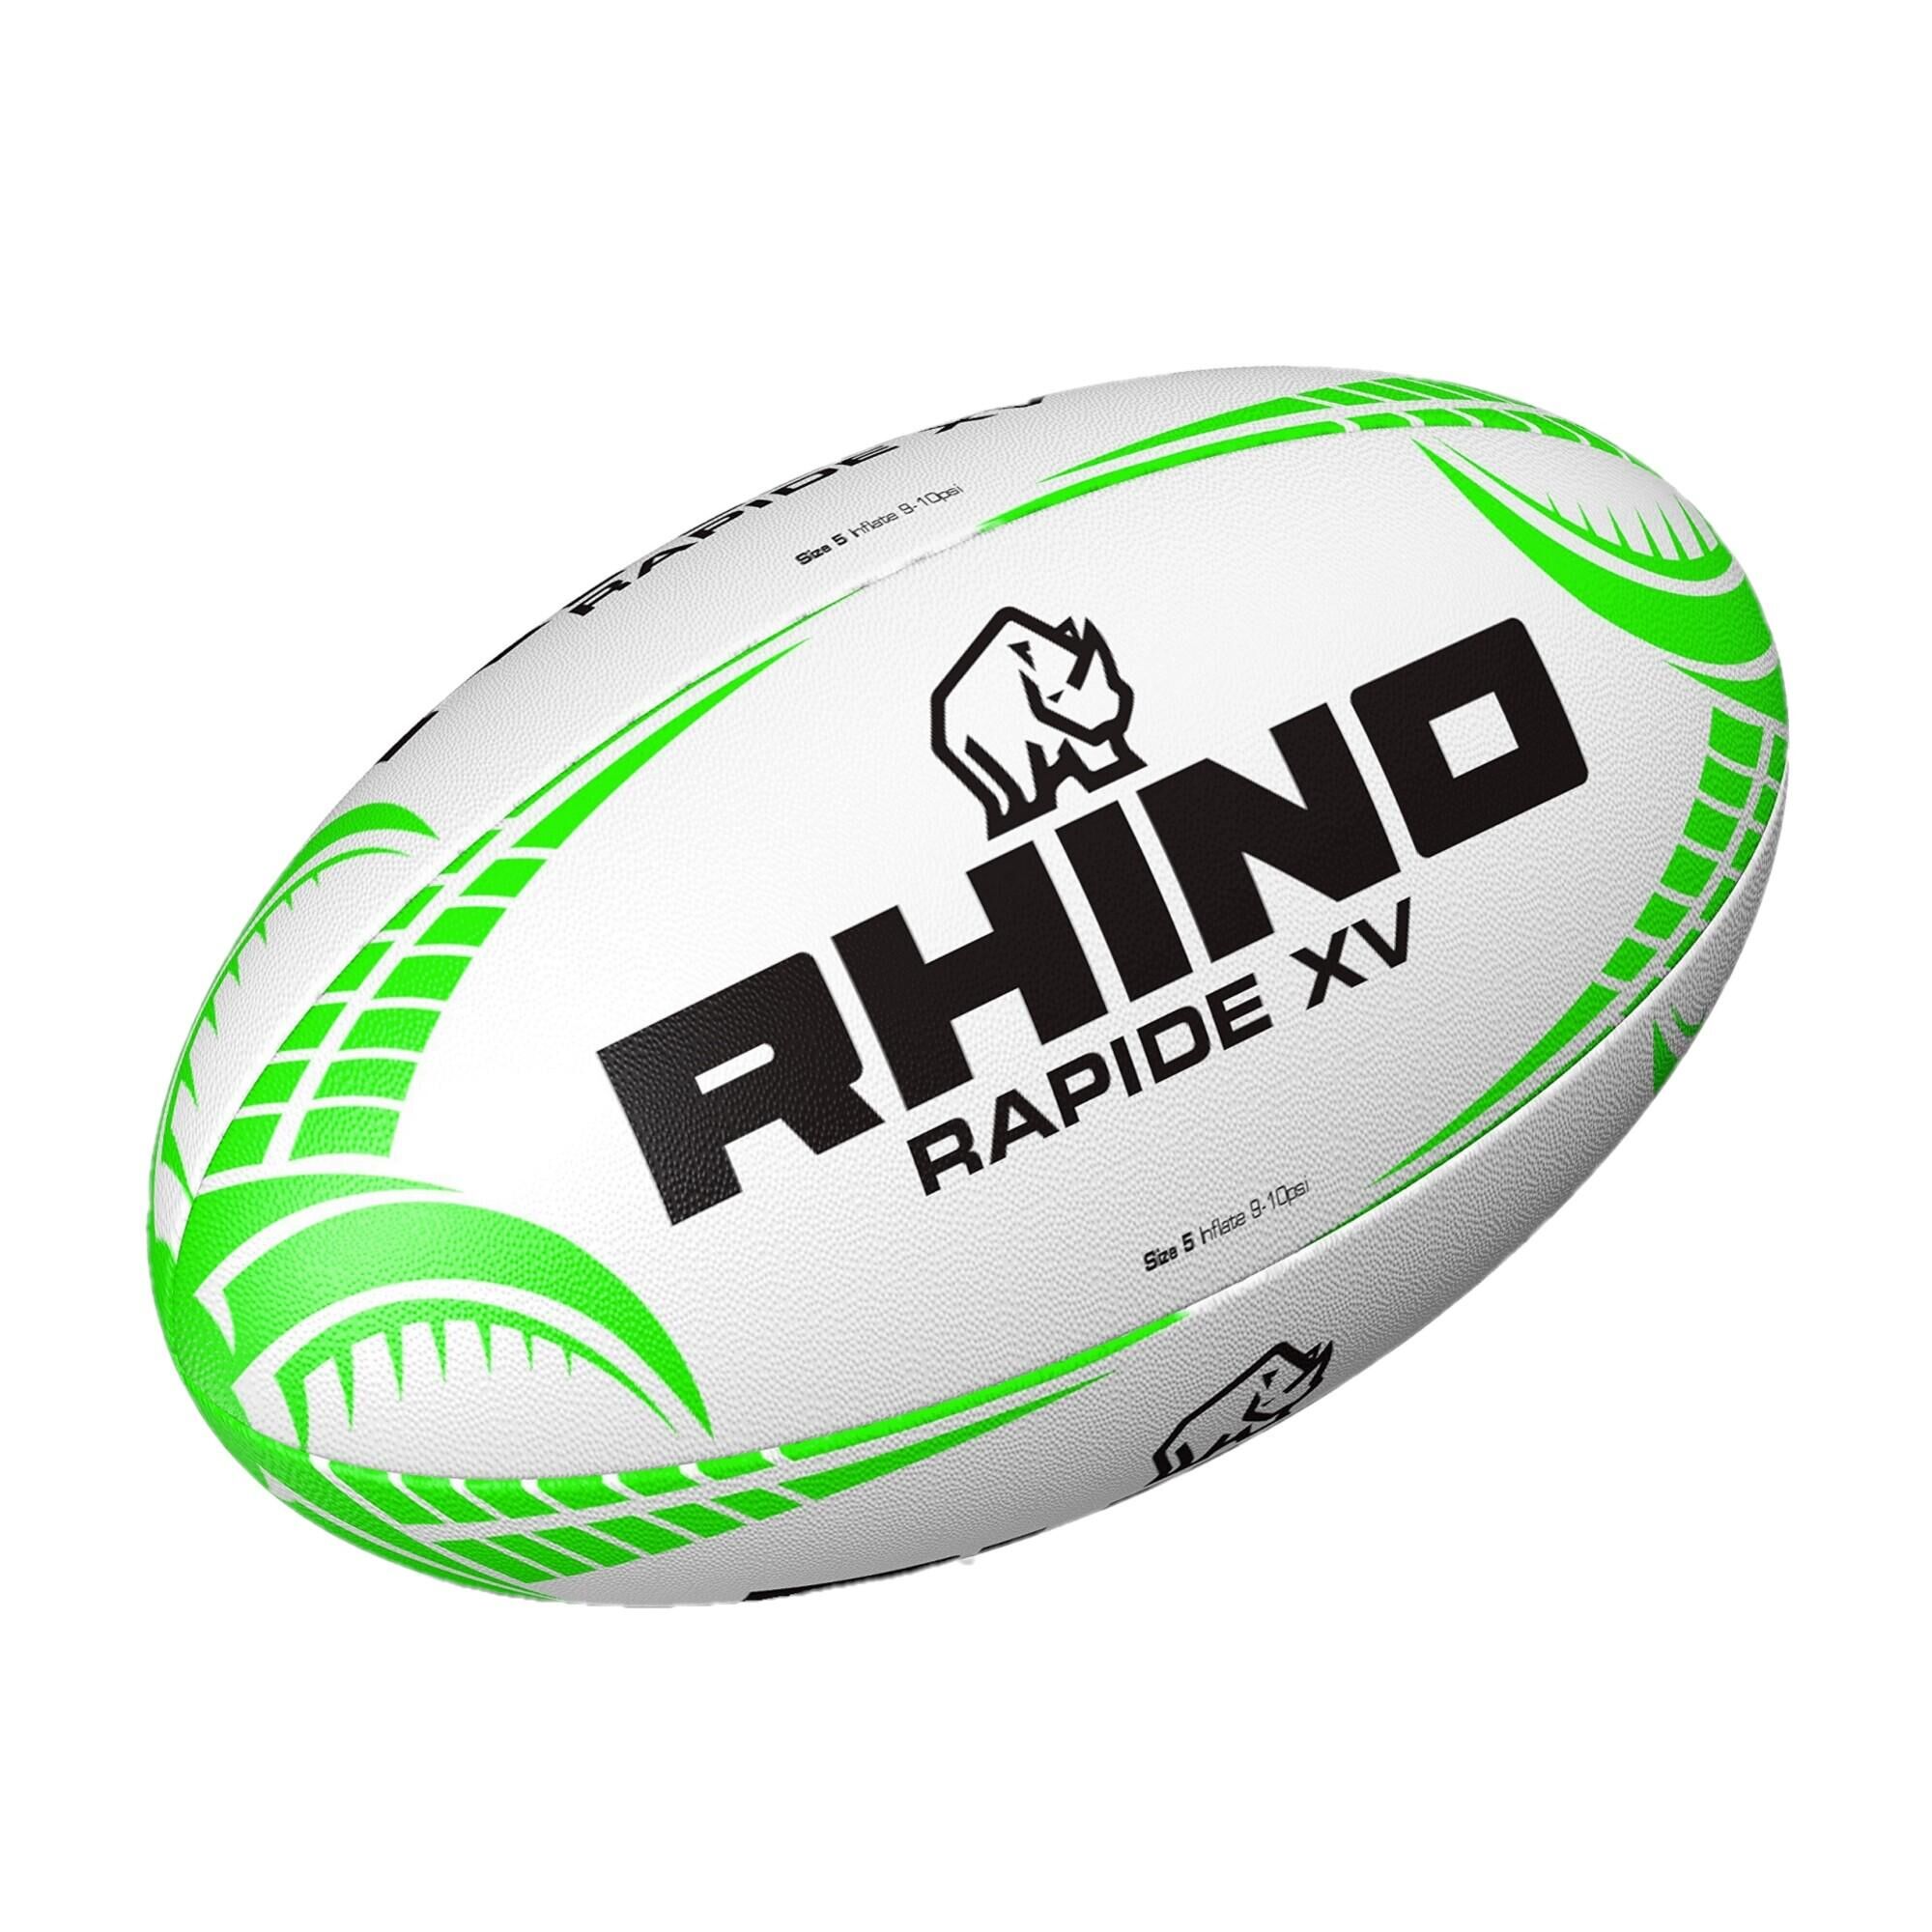 RHINO Rapide XV Rugby Ball (White)